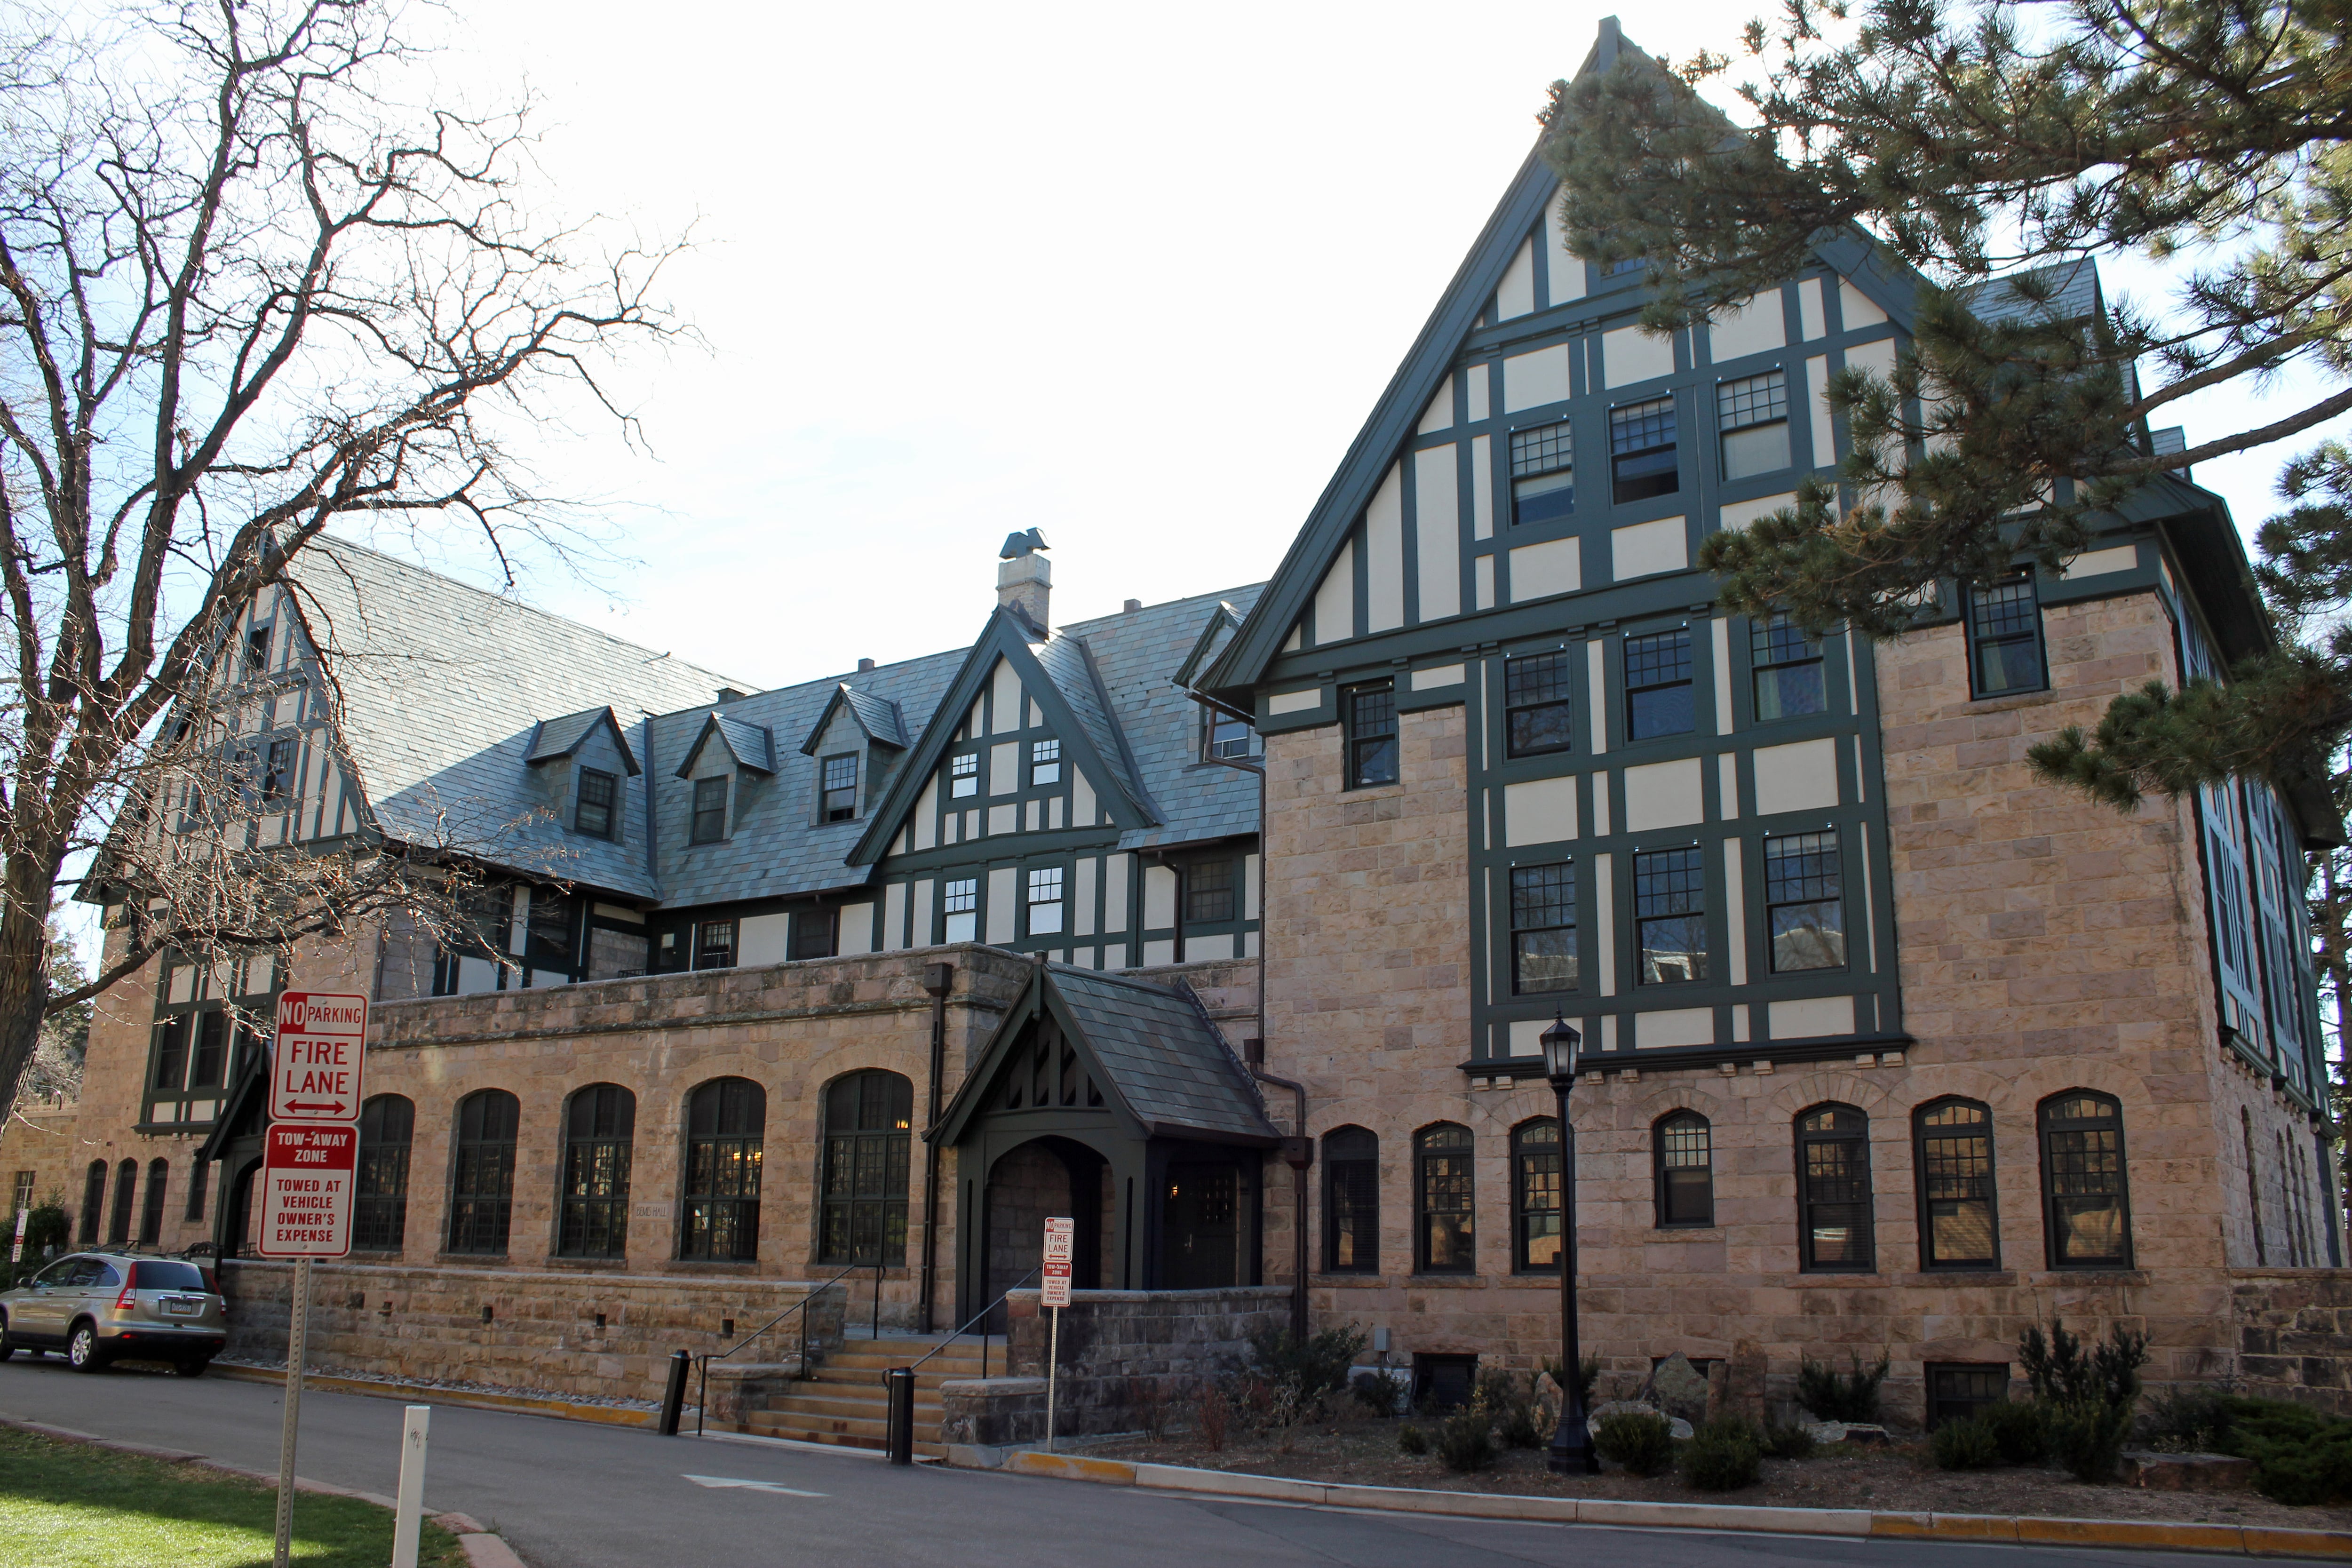 Colorado College’s Bernis Hall, a brick building with a front portico.